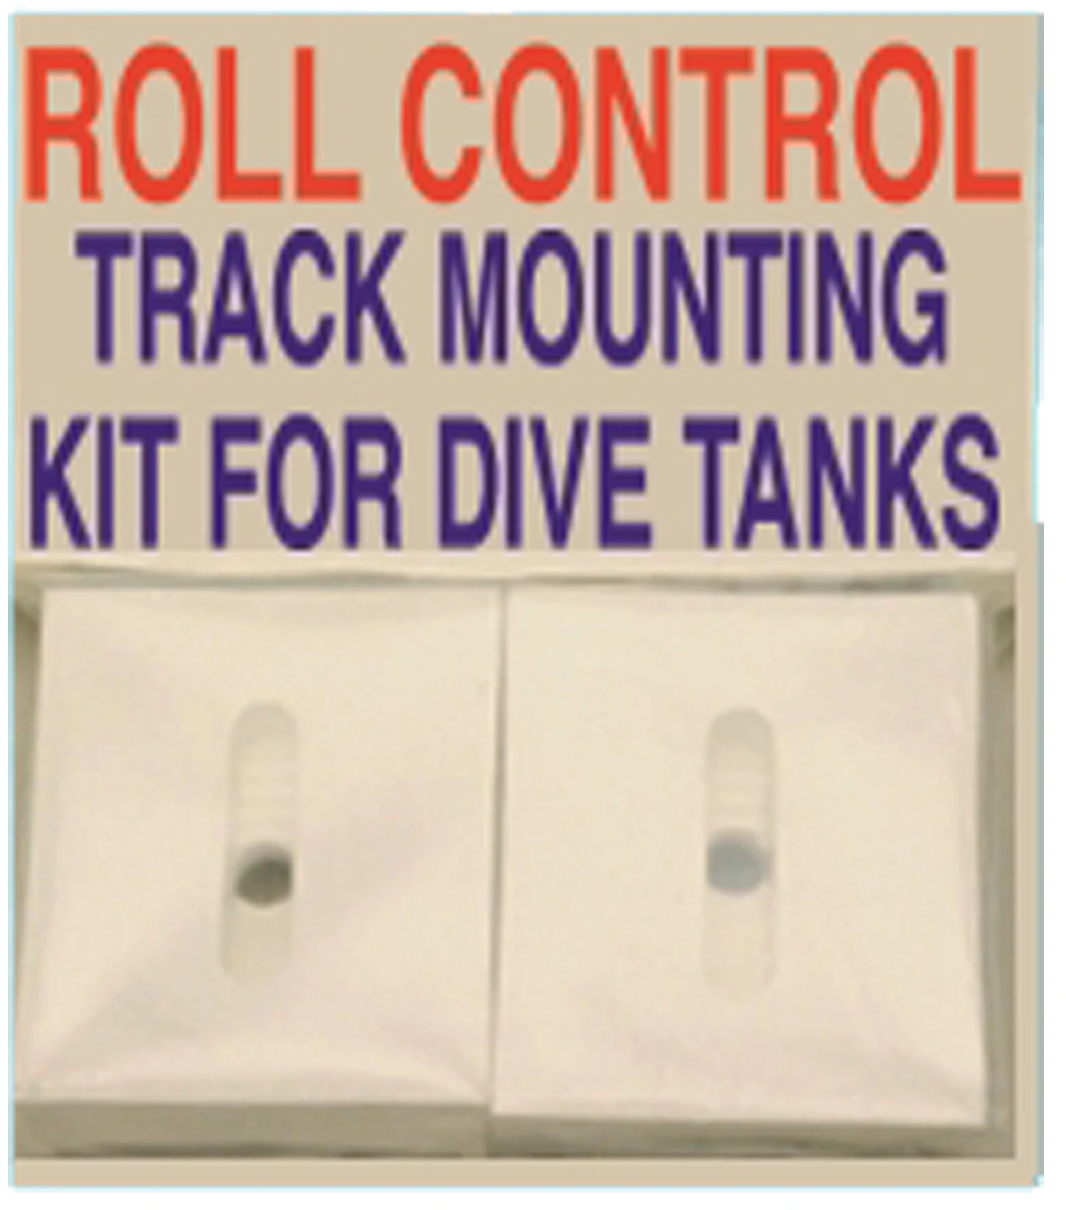 Roll Control Rail Mounting Kit